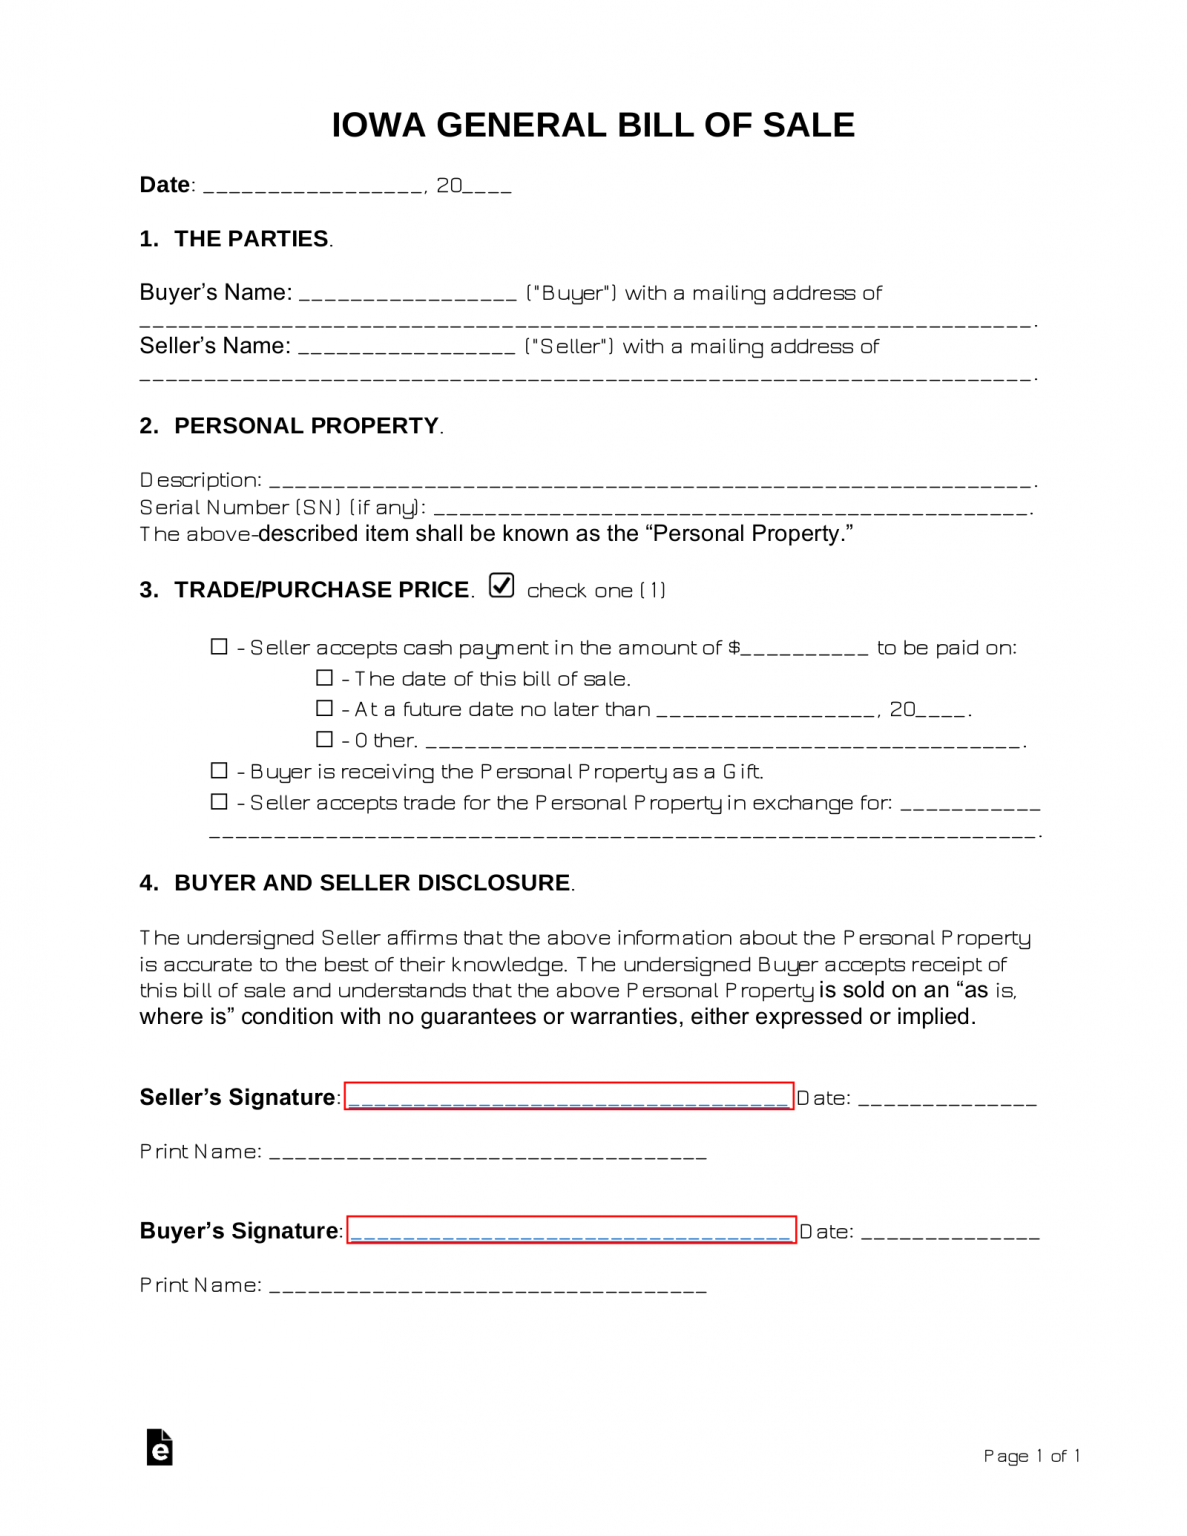 Free Iowa General Bill of Sale Form Word PDF eForms